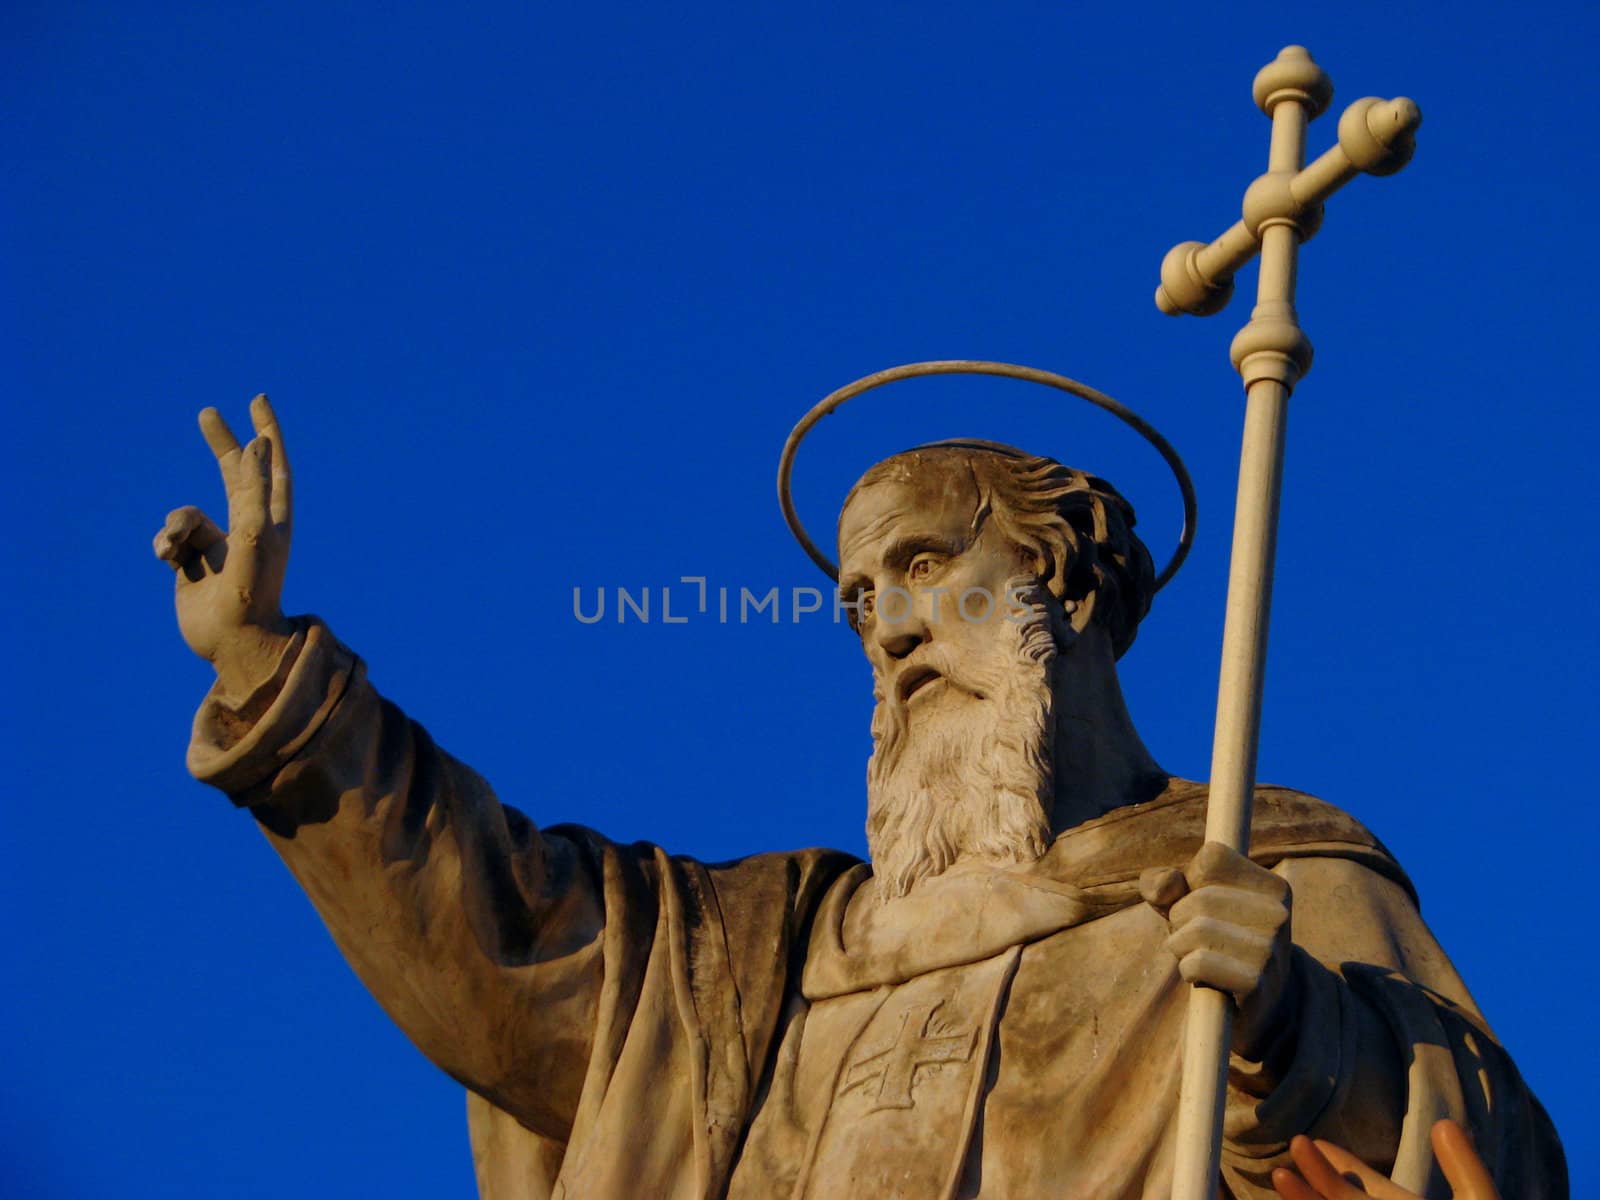 A detail of the stone statue of Saint Philip in Zebbug, Malta.